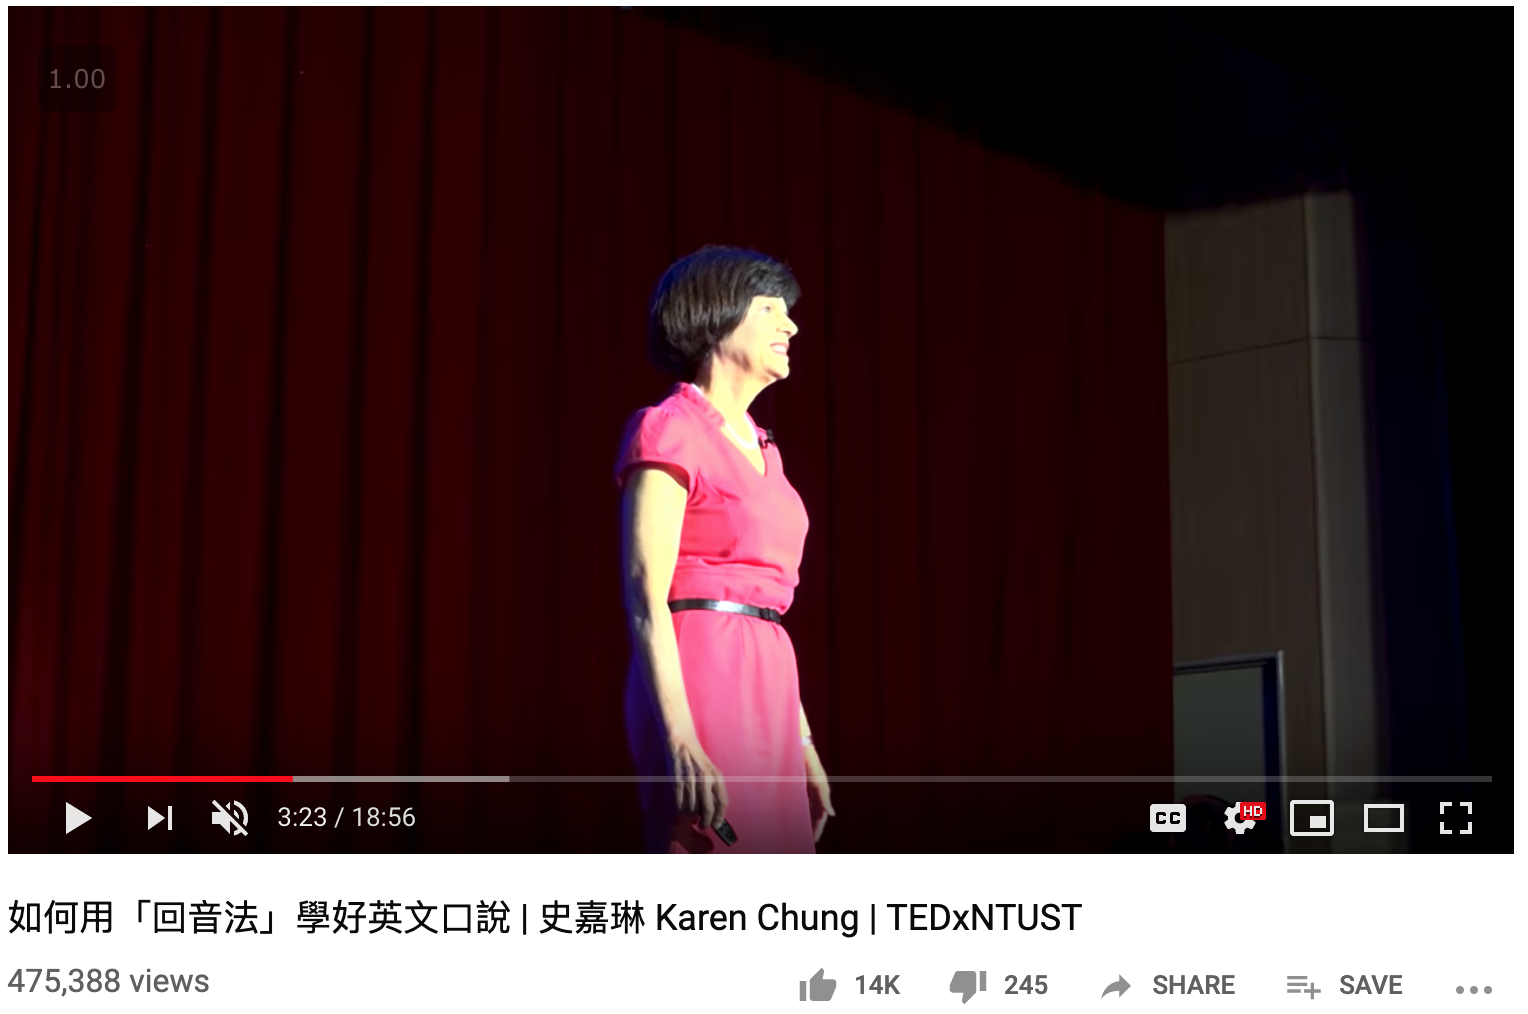 Karen Chung's TEDx Talk on The Echo Method